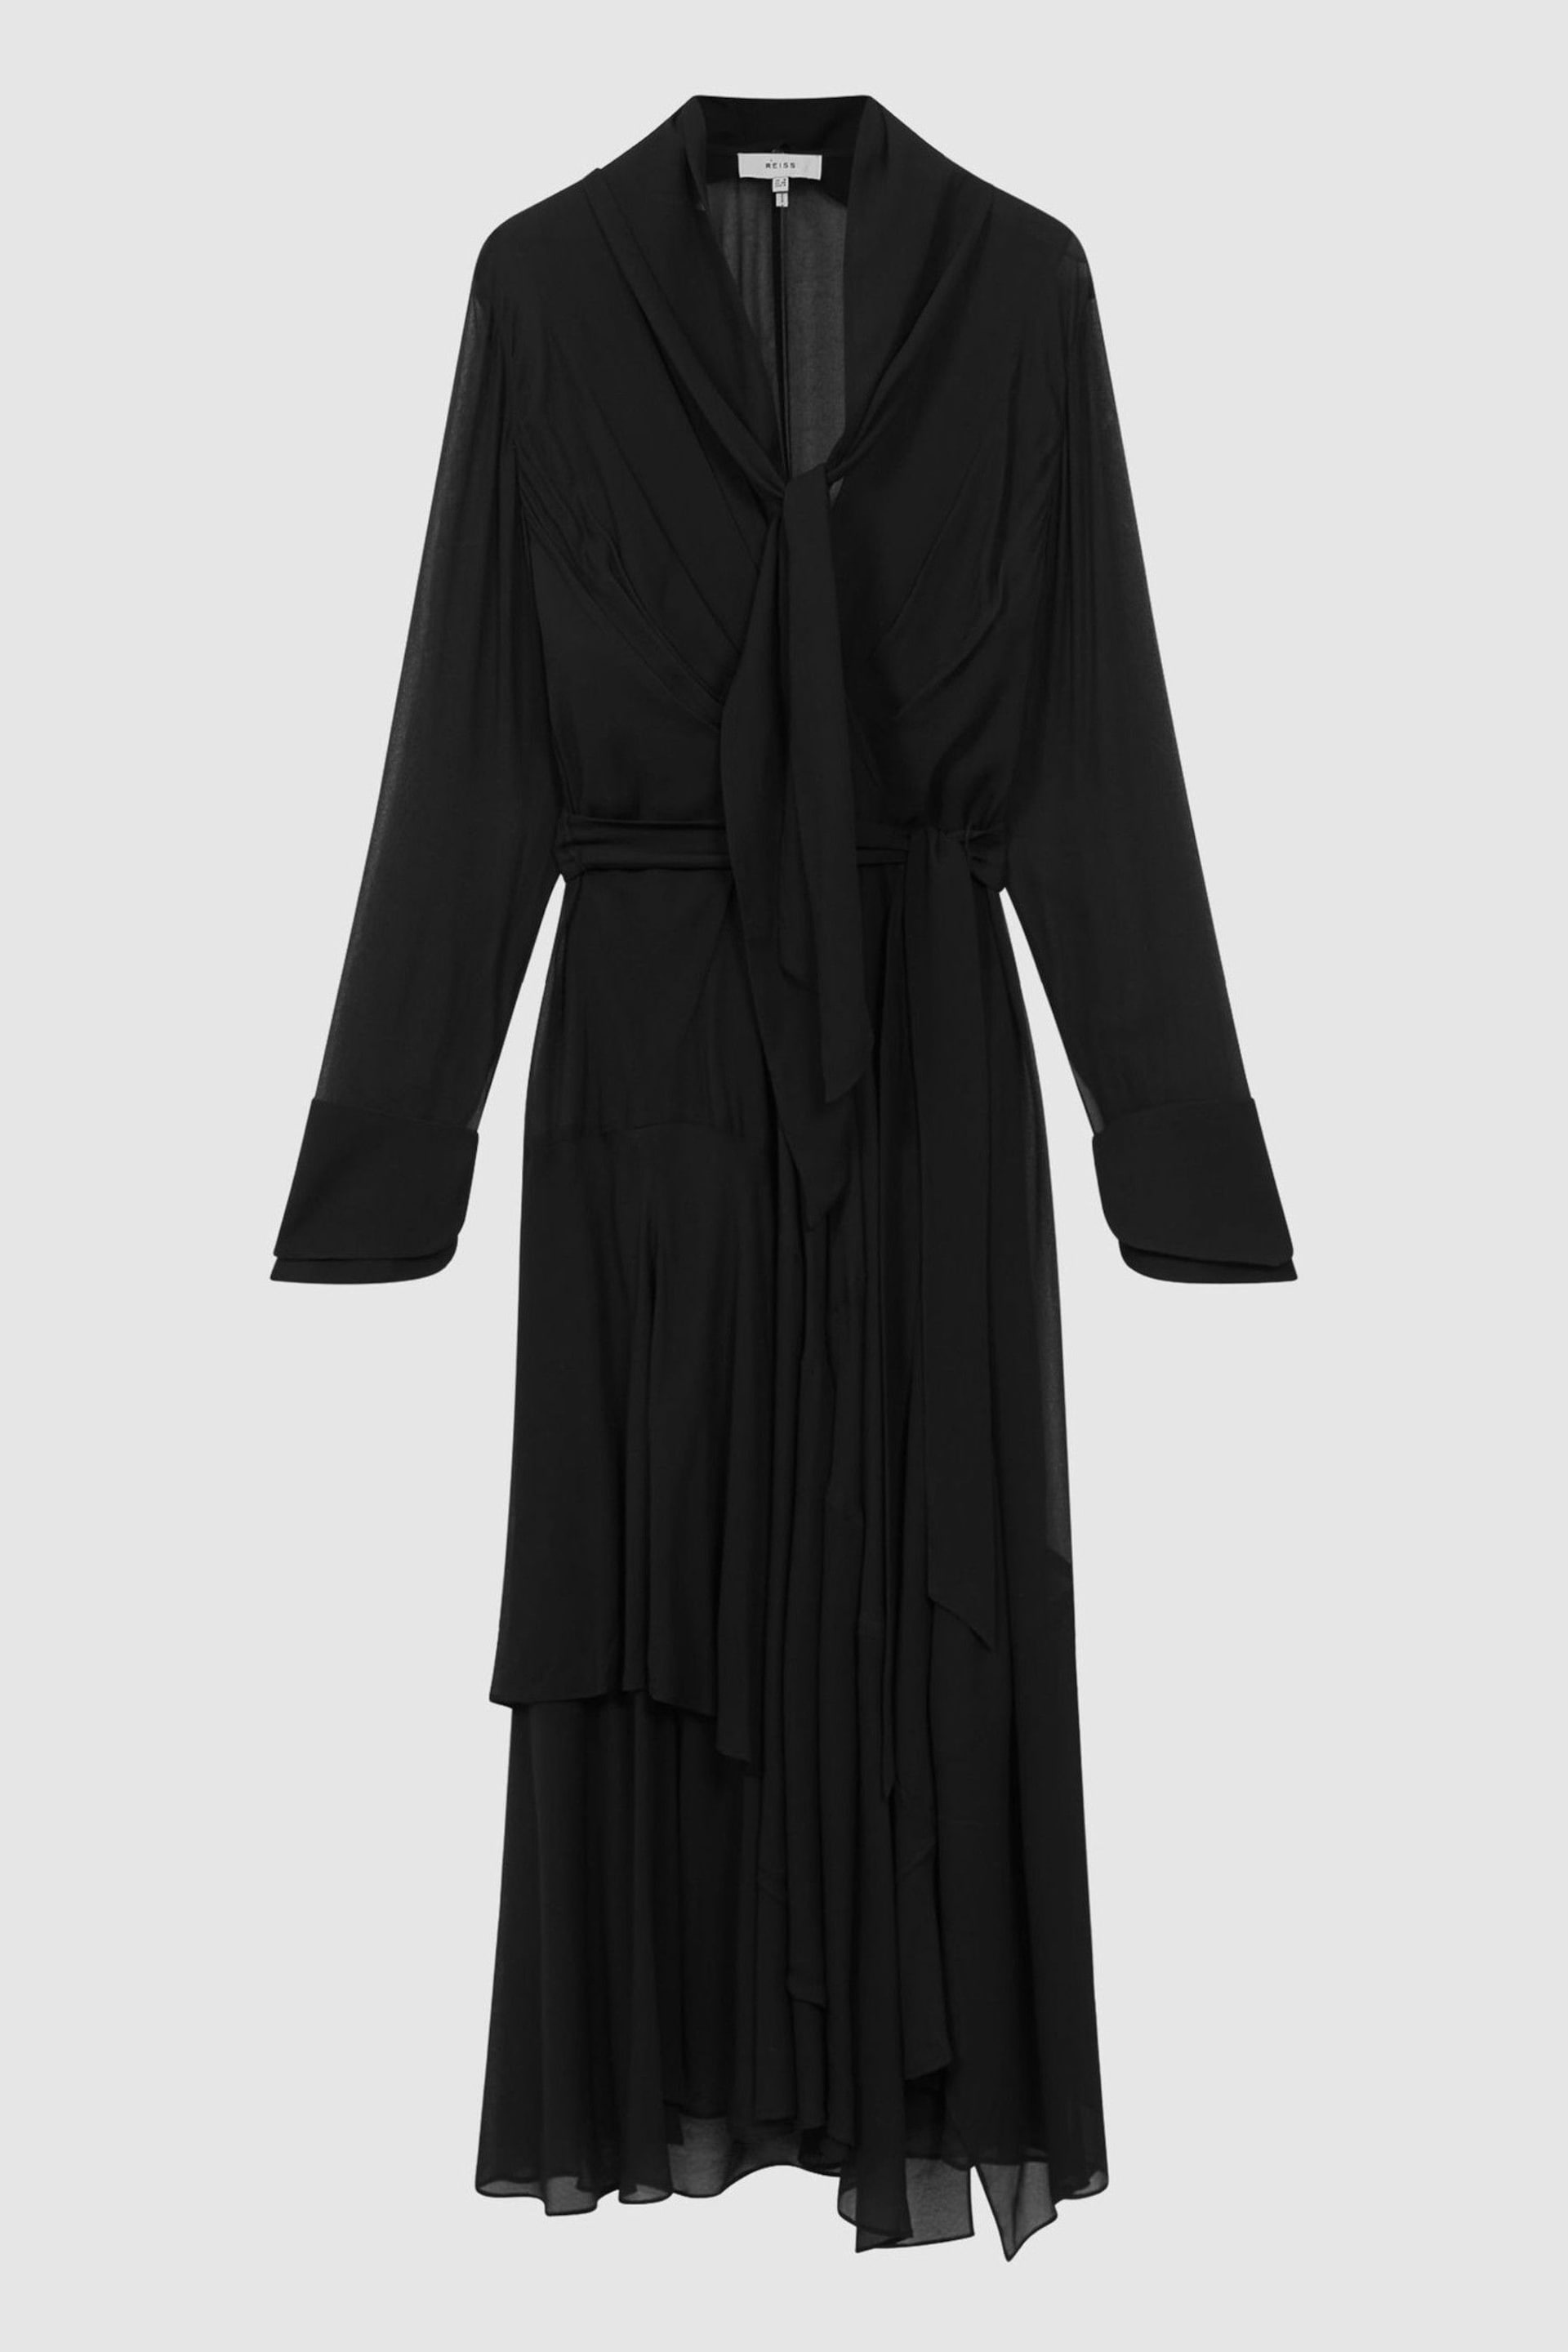 Reiss Black Callie Belted Ruffle Midi Dress - Image 2 of 5